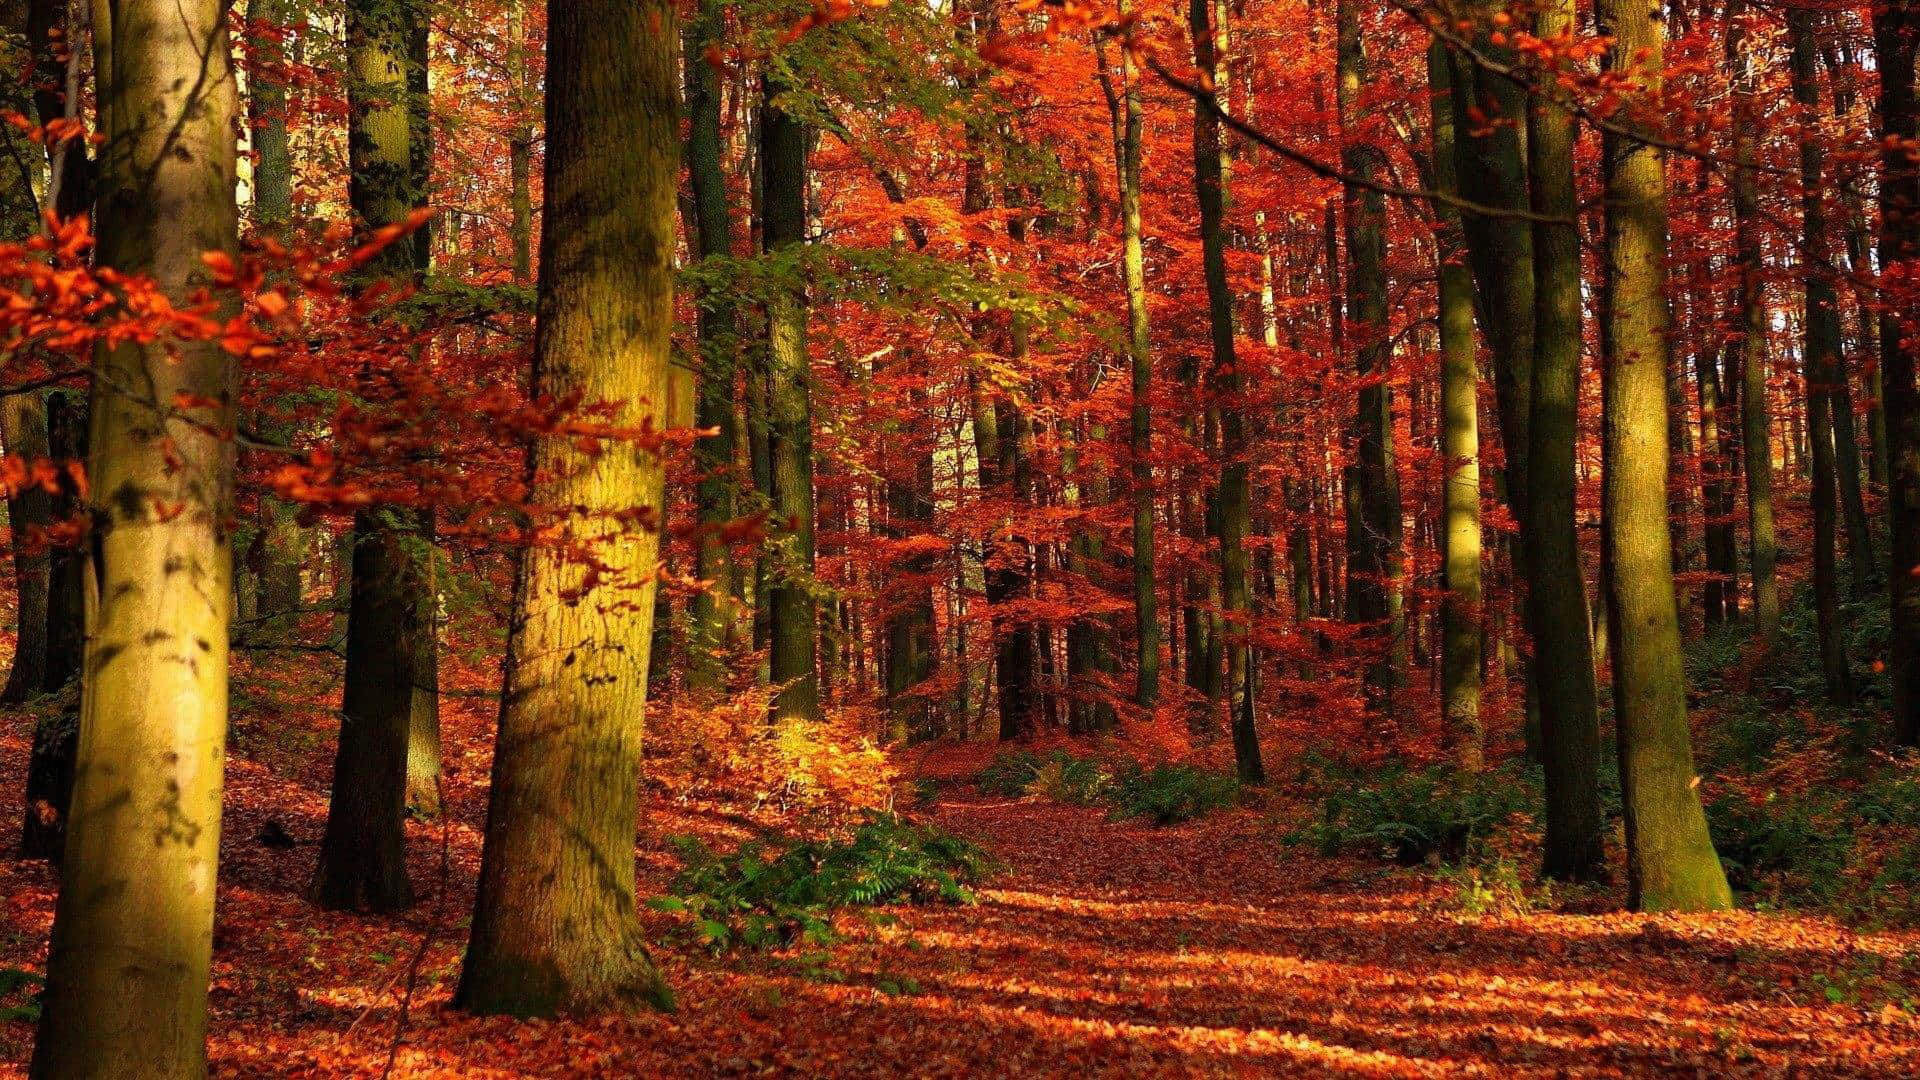 Stunning Autumn Scenery, high-resolution fall background